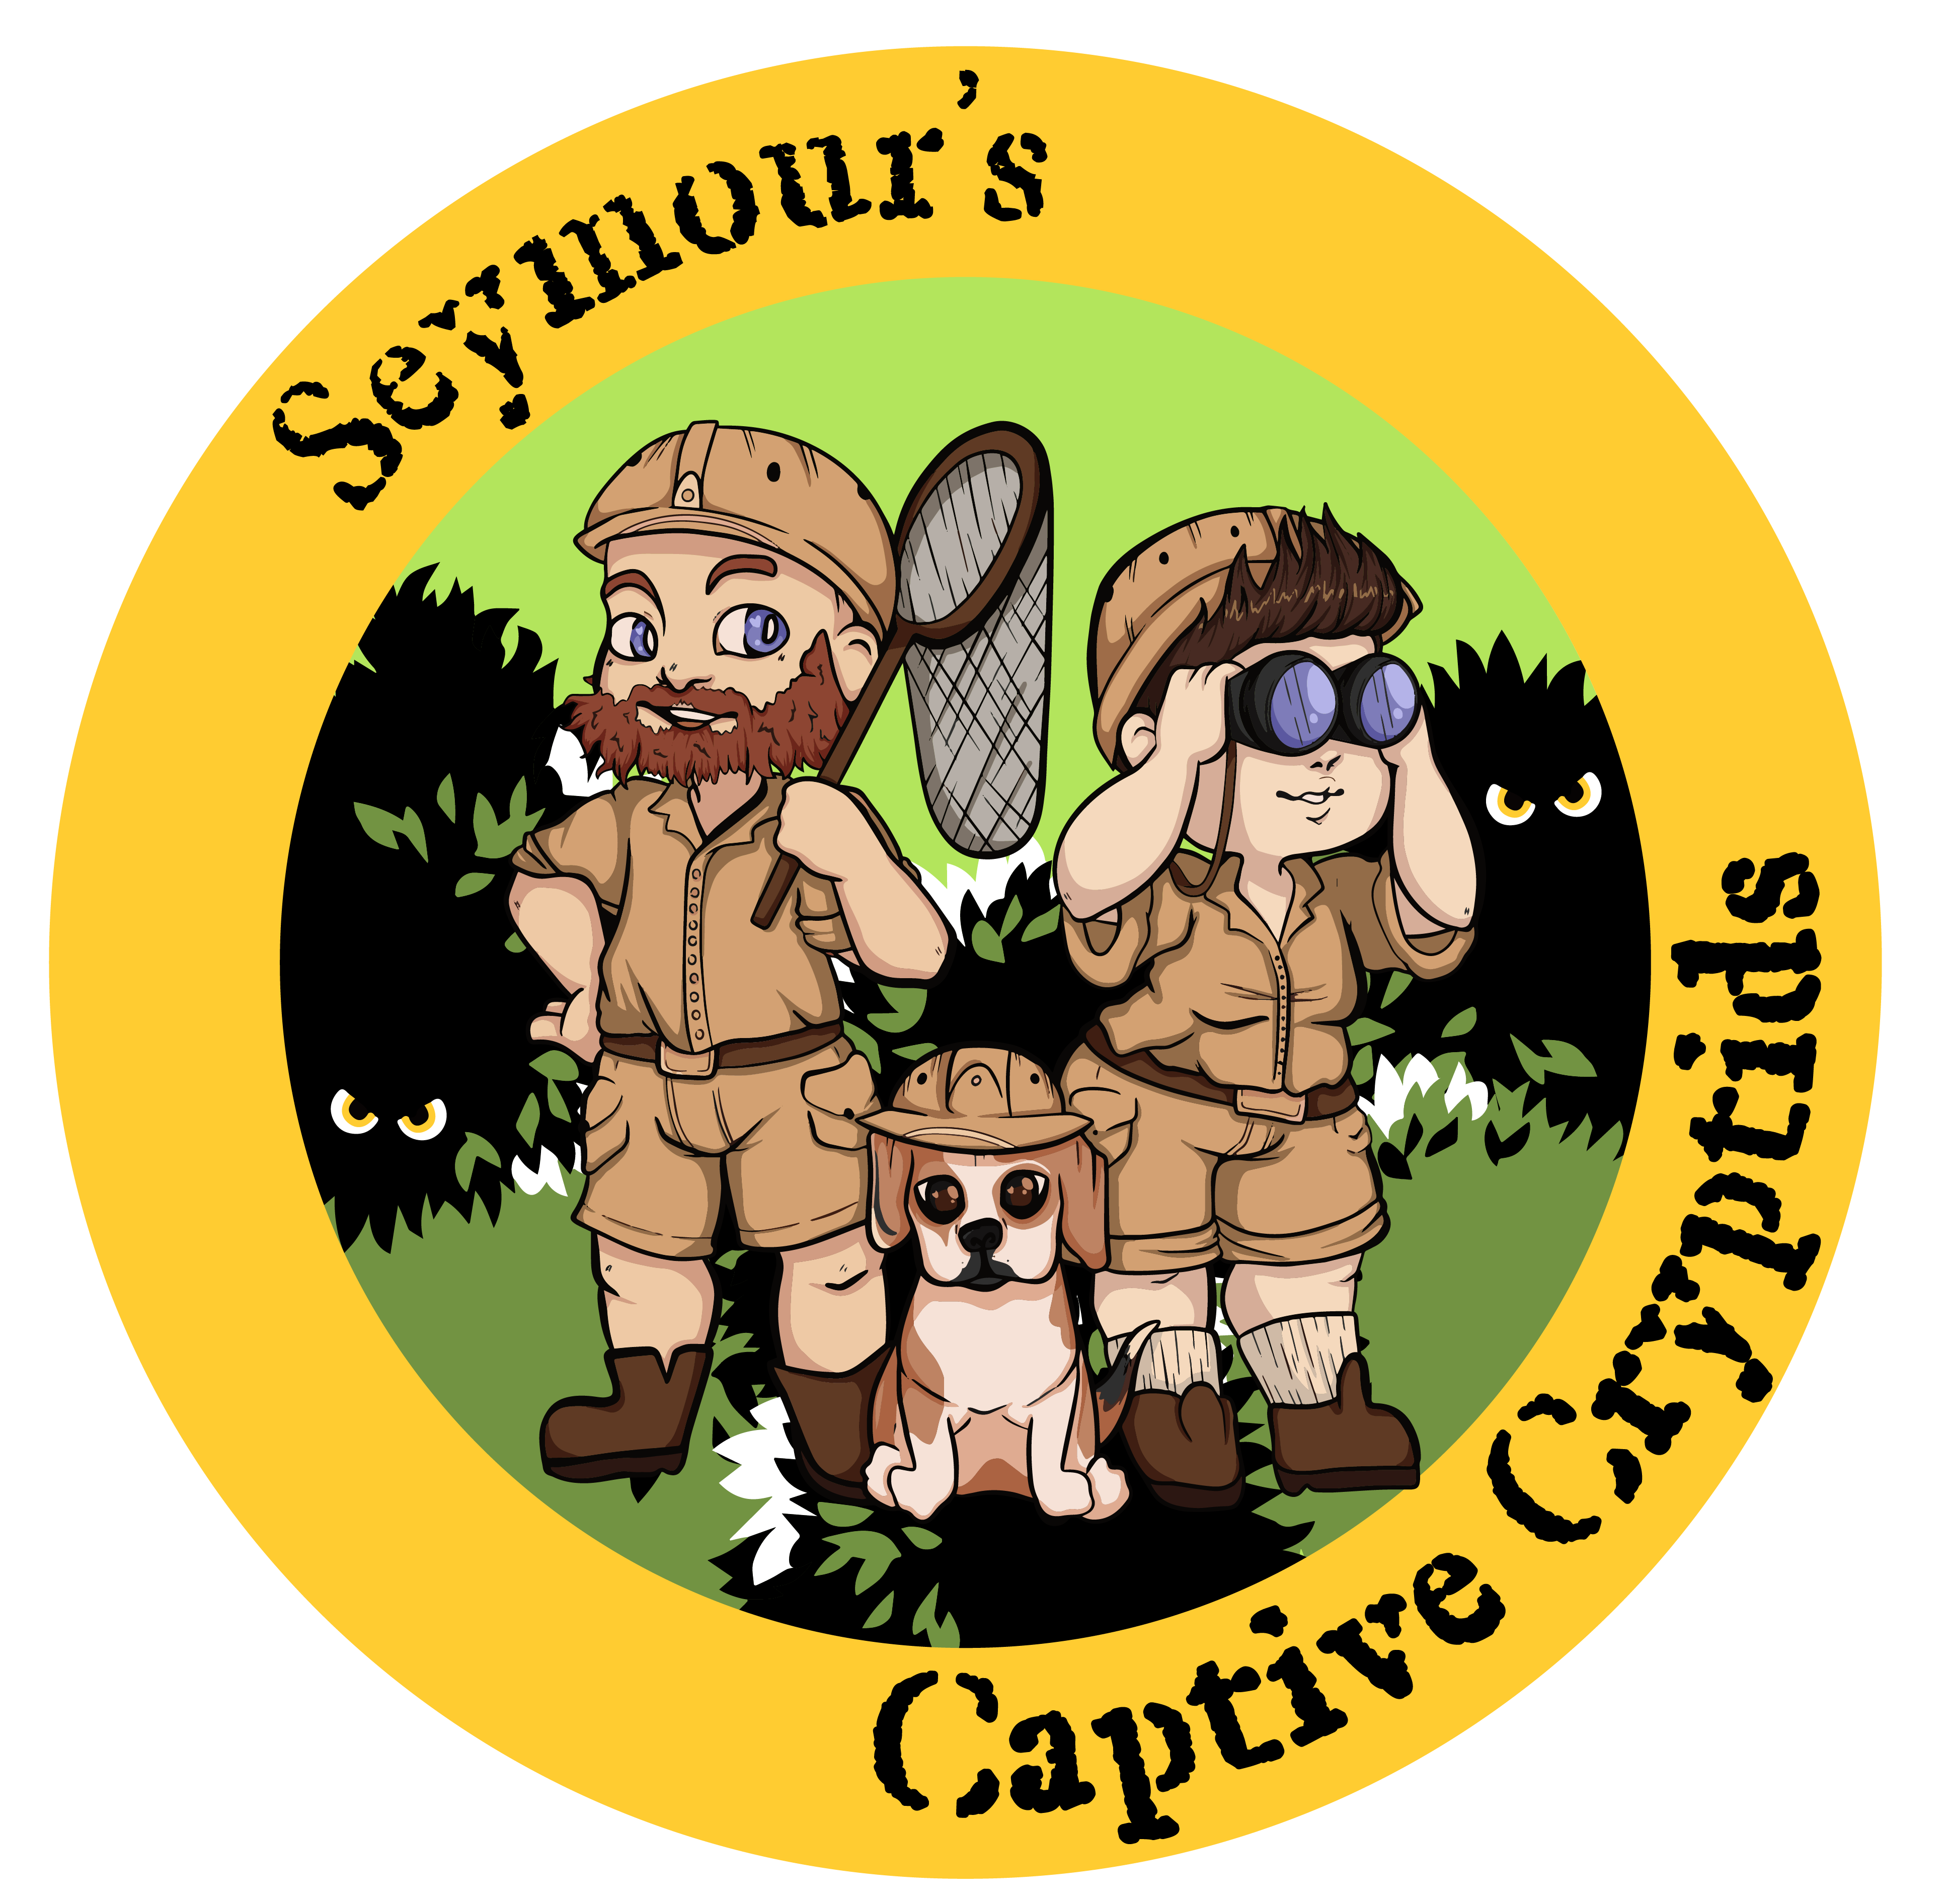 seymour's captive cryptids logo